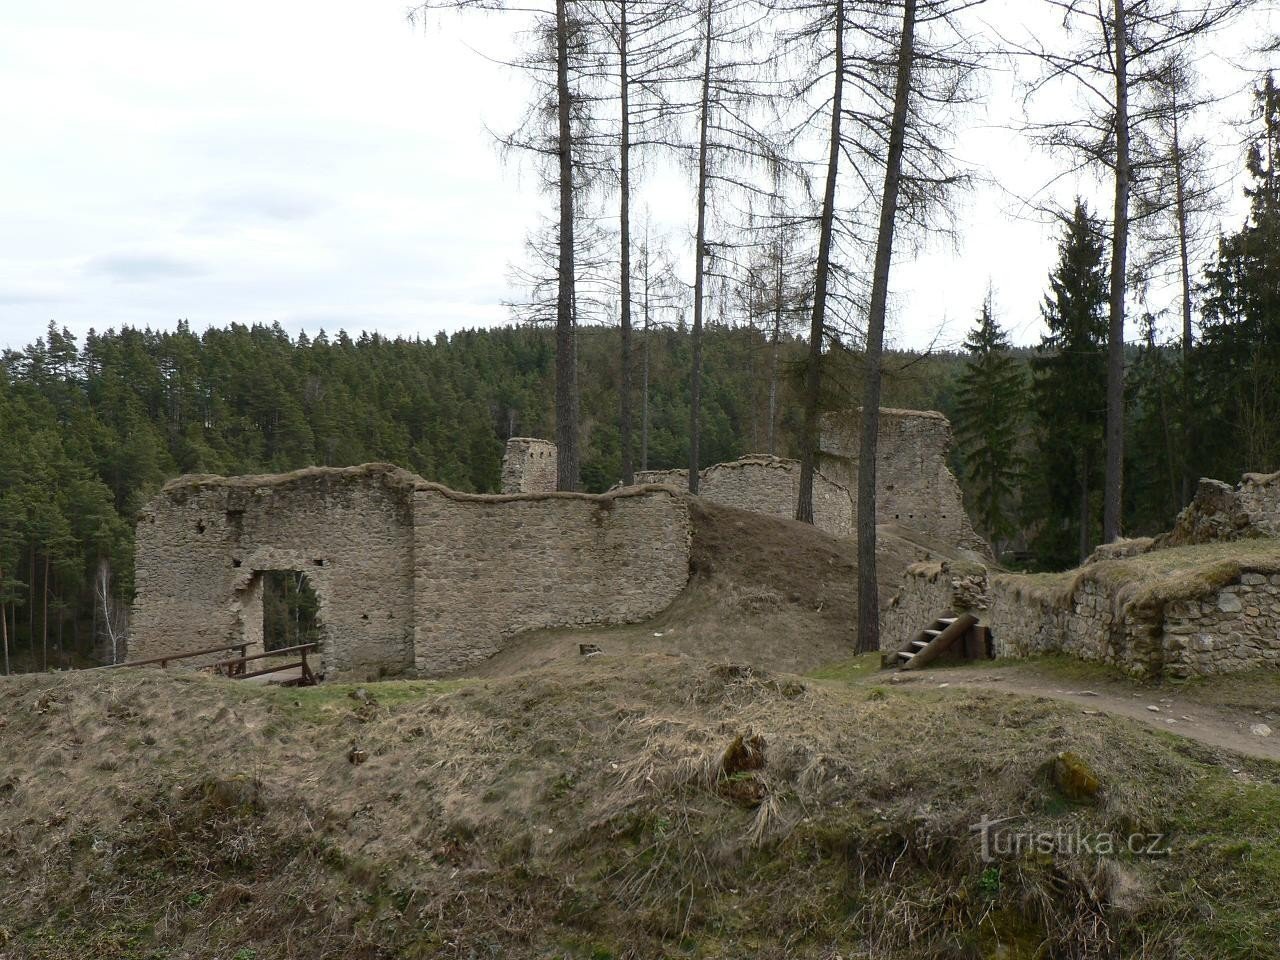 Pořešín, södra delen av slottet